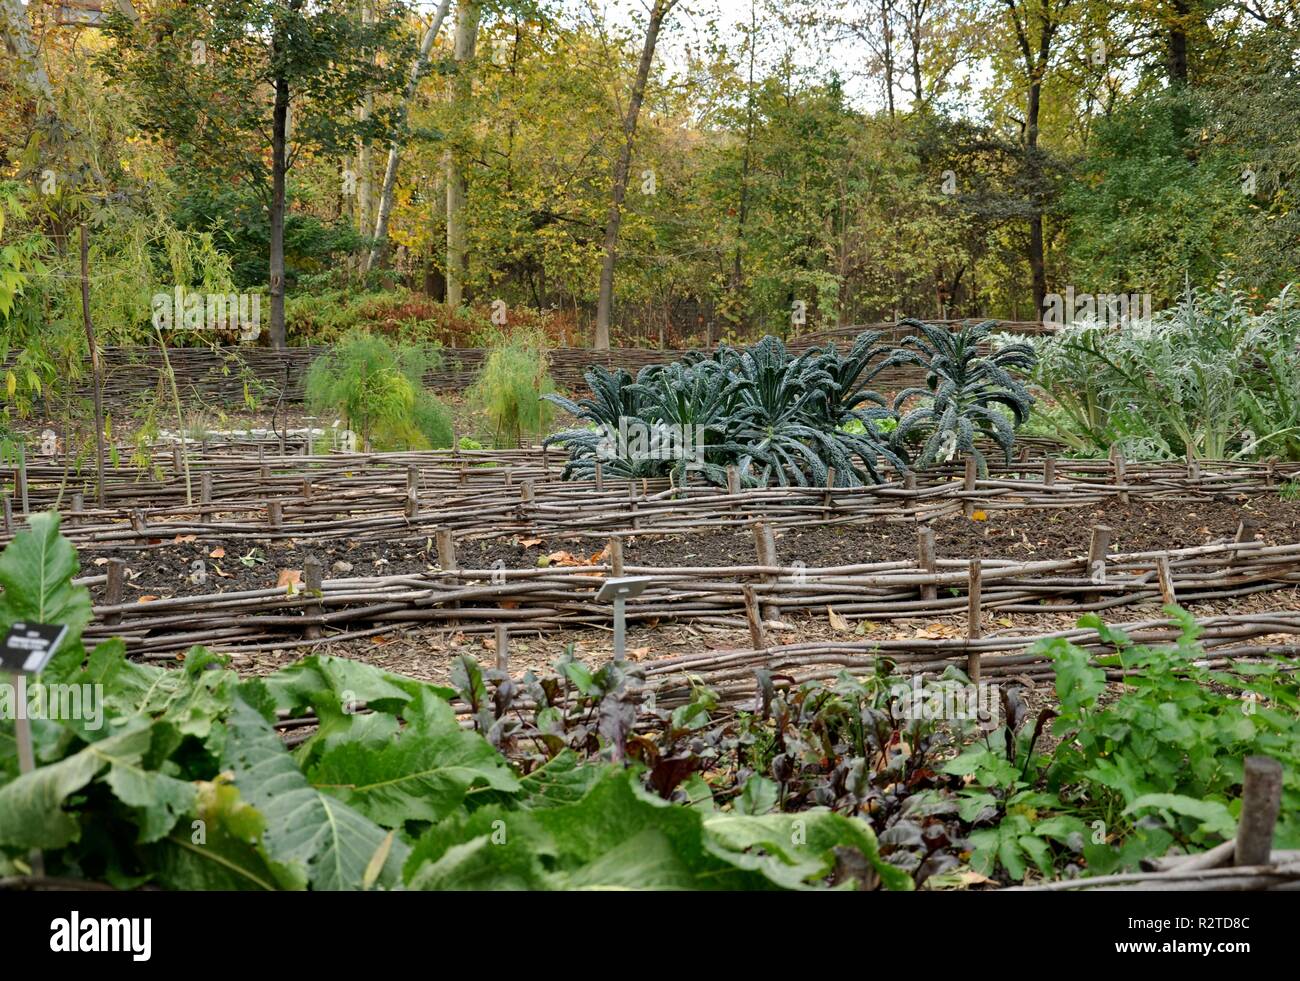 Landscape of an vegetable garden Stock Photo